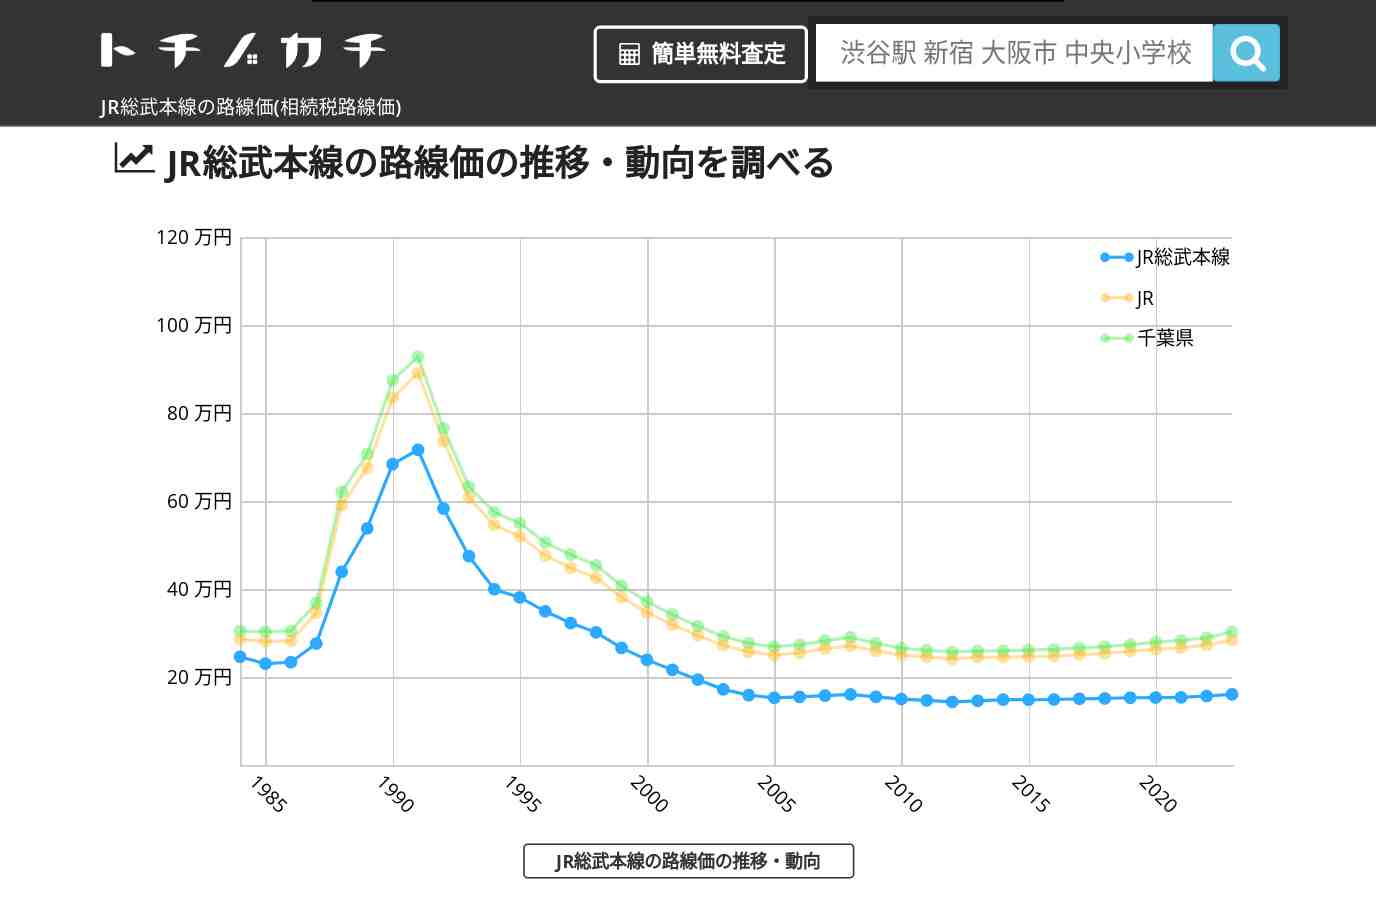 JR総武本線(JR)の路線価(相続税路線価) | トチノカチ